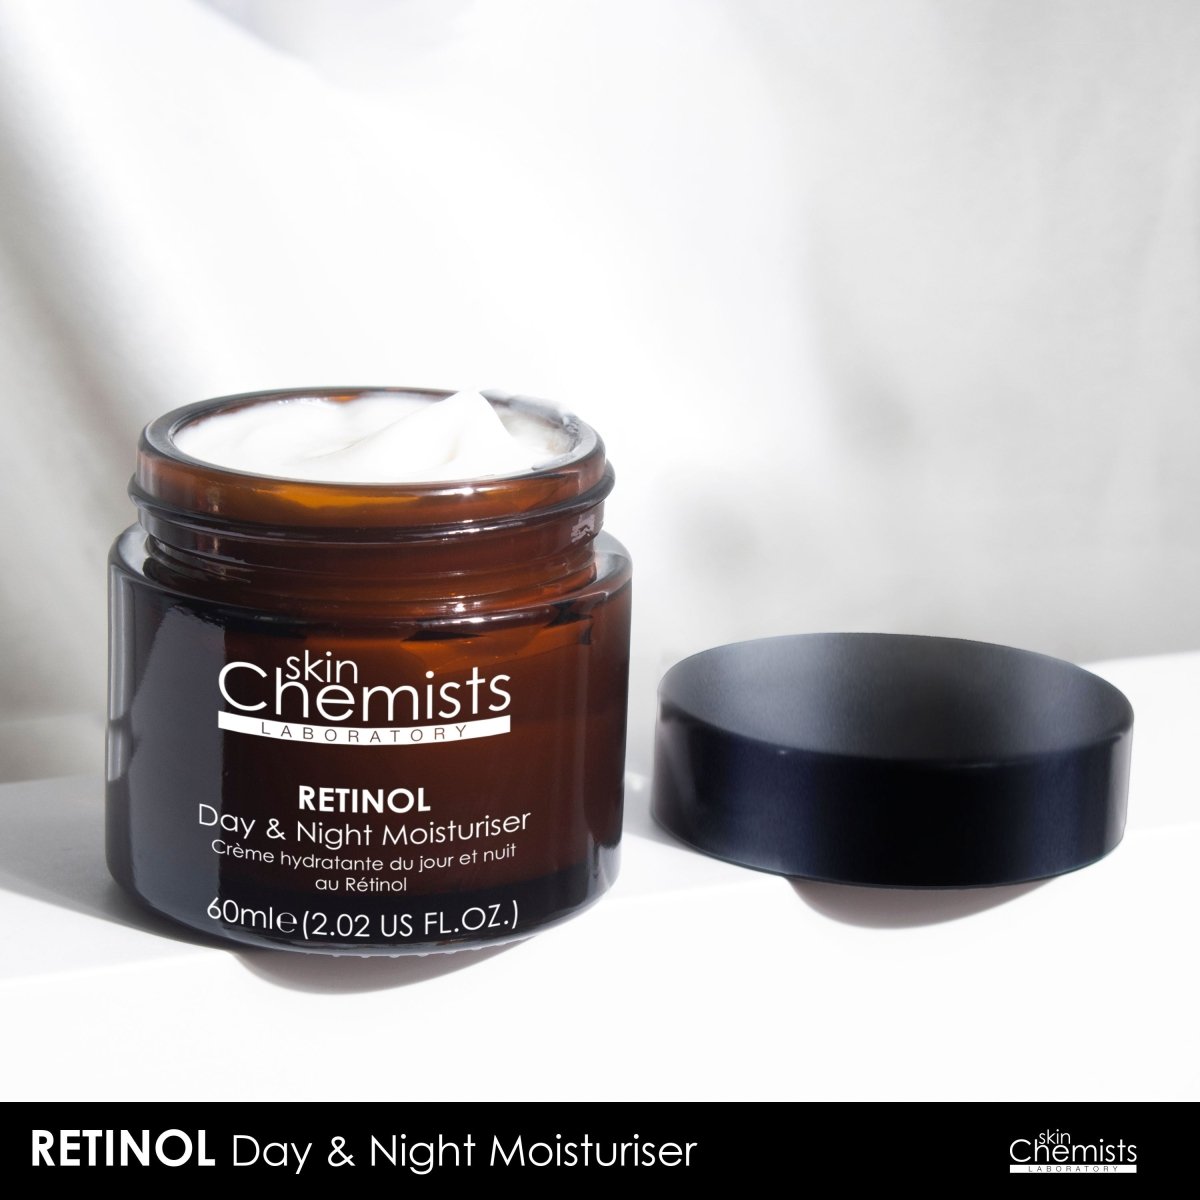 Anti - Ageing Retinol Night Moisturiser with SYN® - AKE 60ml - skinChemists